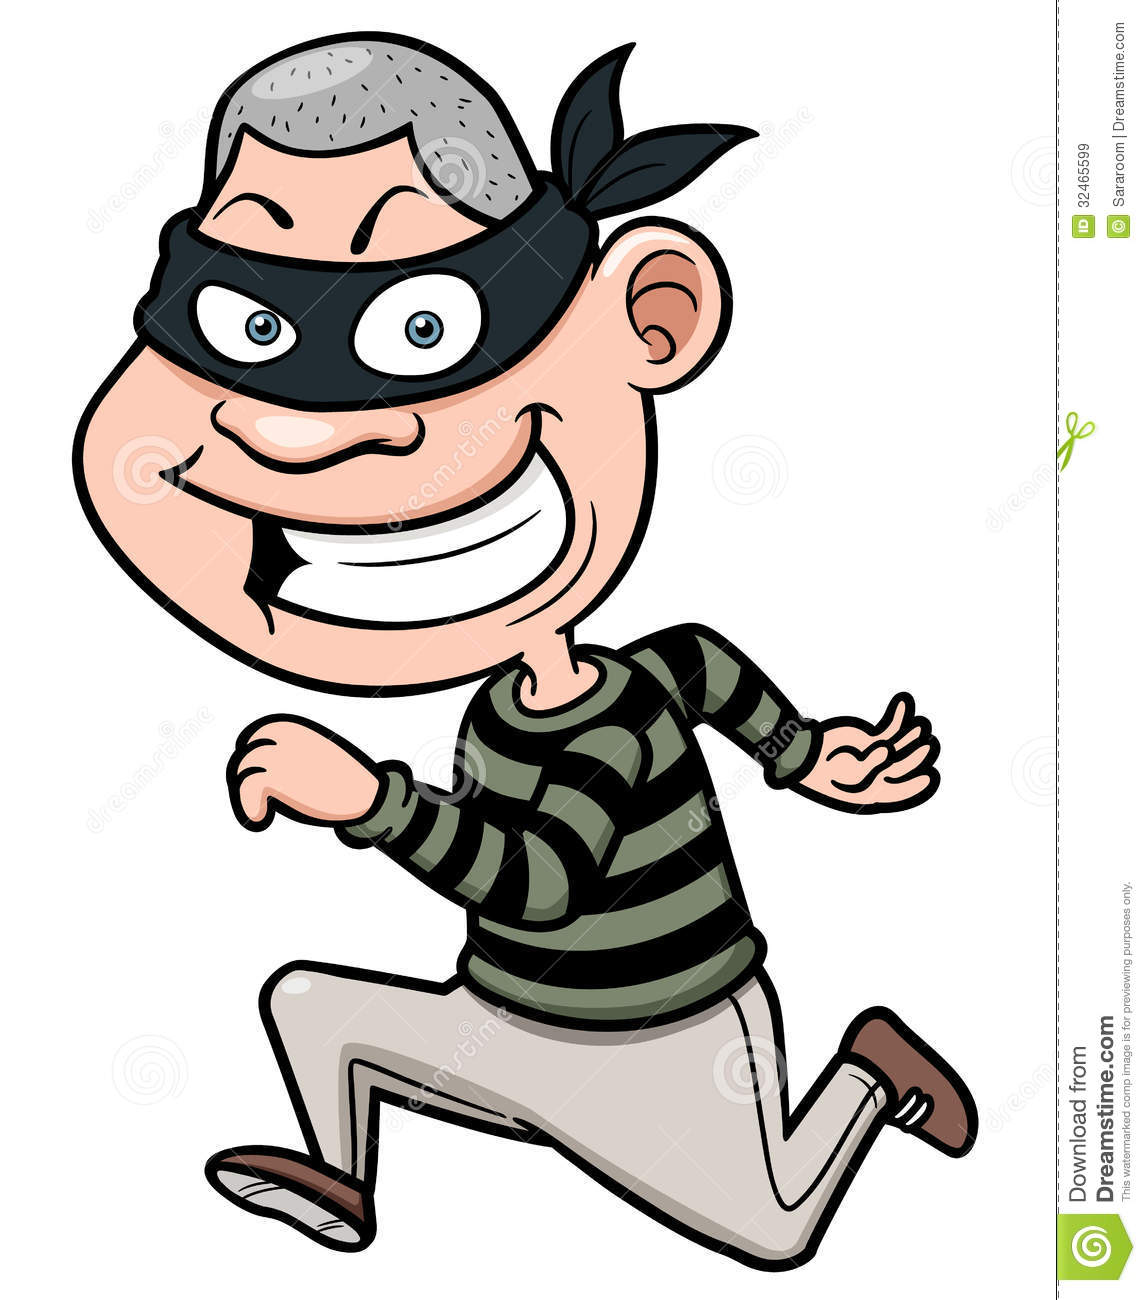 Cartoon Thief Running Royalty Free Stock Images   Image  32465599